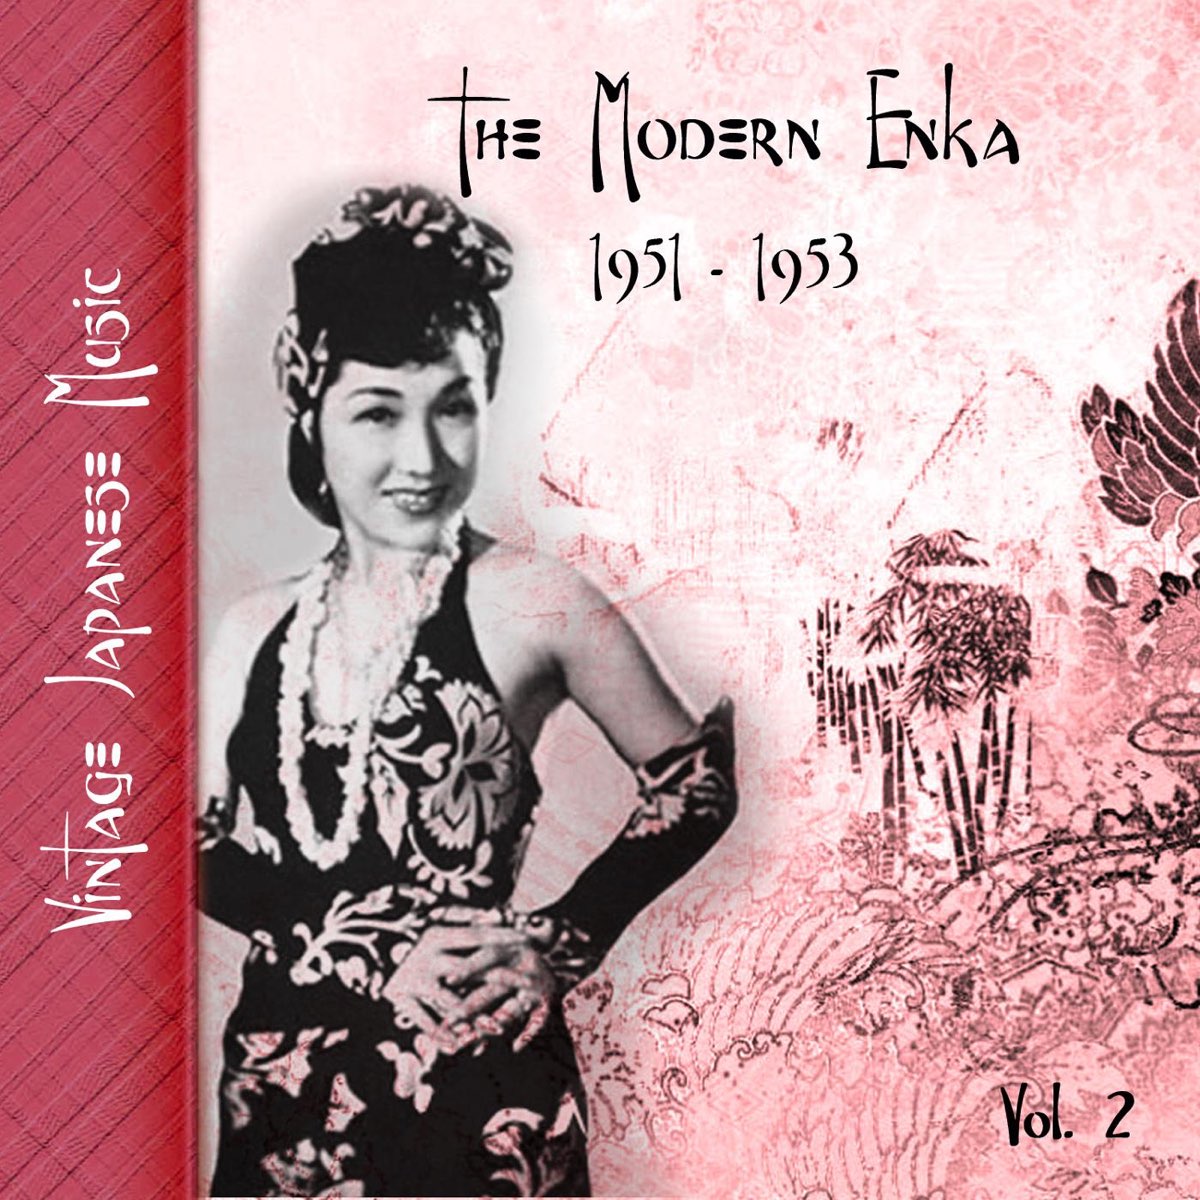 1951 1953. Идзу певица обложка. 196x - Kimura Yoshio no Guitar Enka обложка альбома.